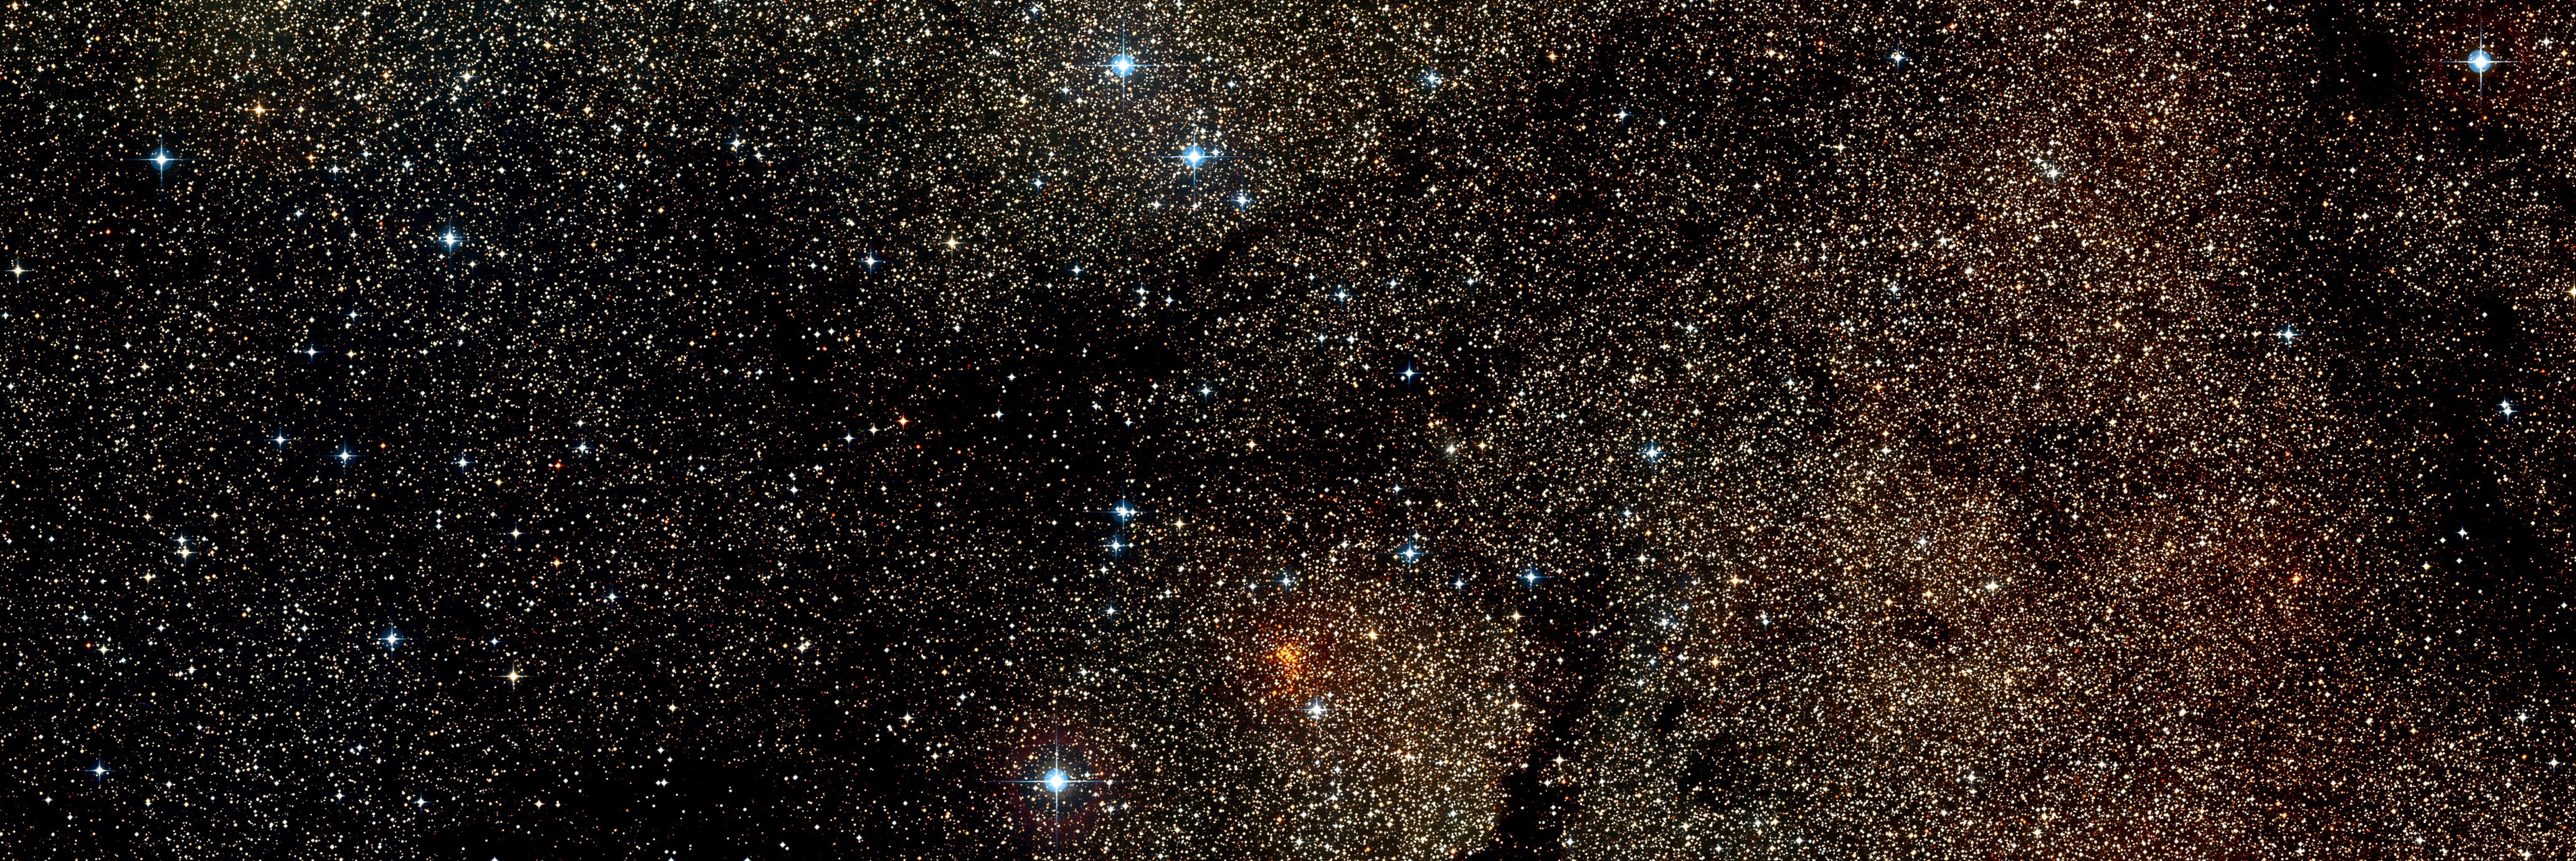 Space Stars 4136x1382